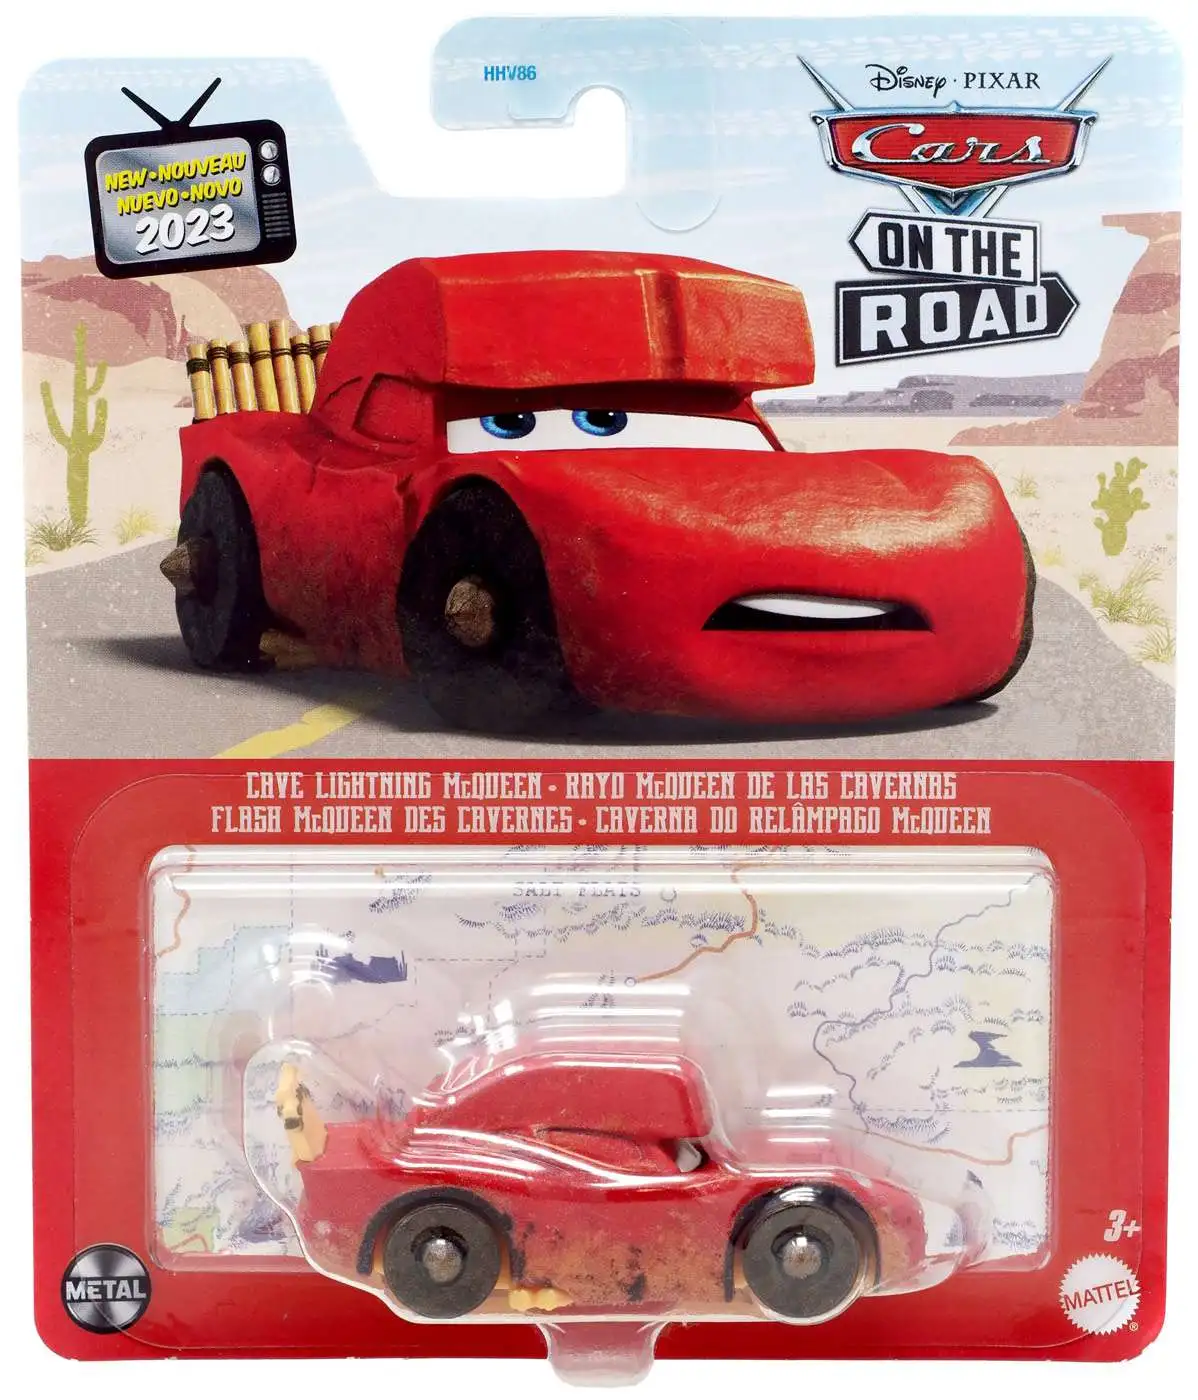 Disney Pixar Cars On The Road Cave Lightning McQueen 155 Diecast